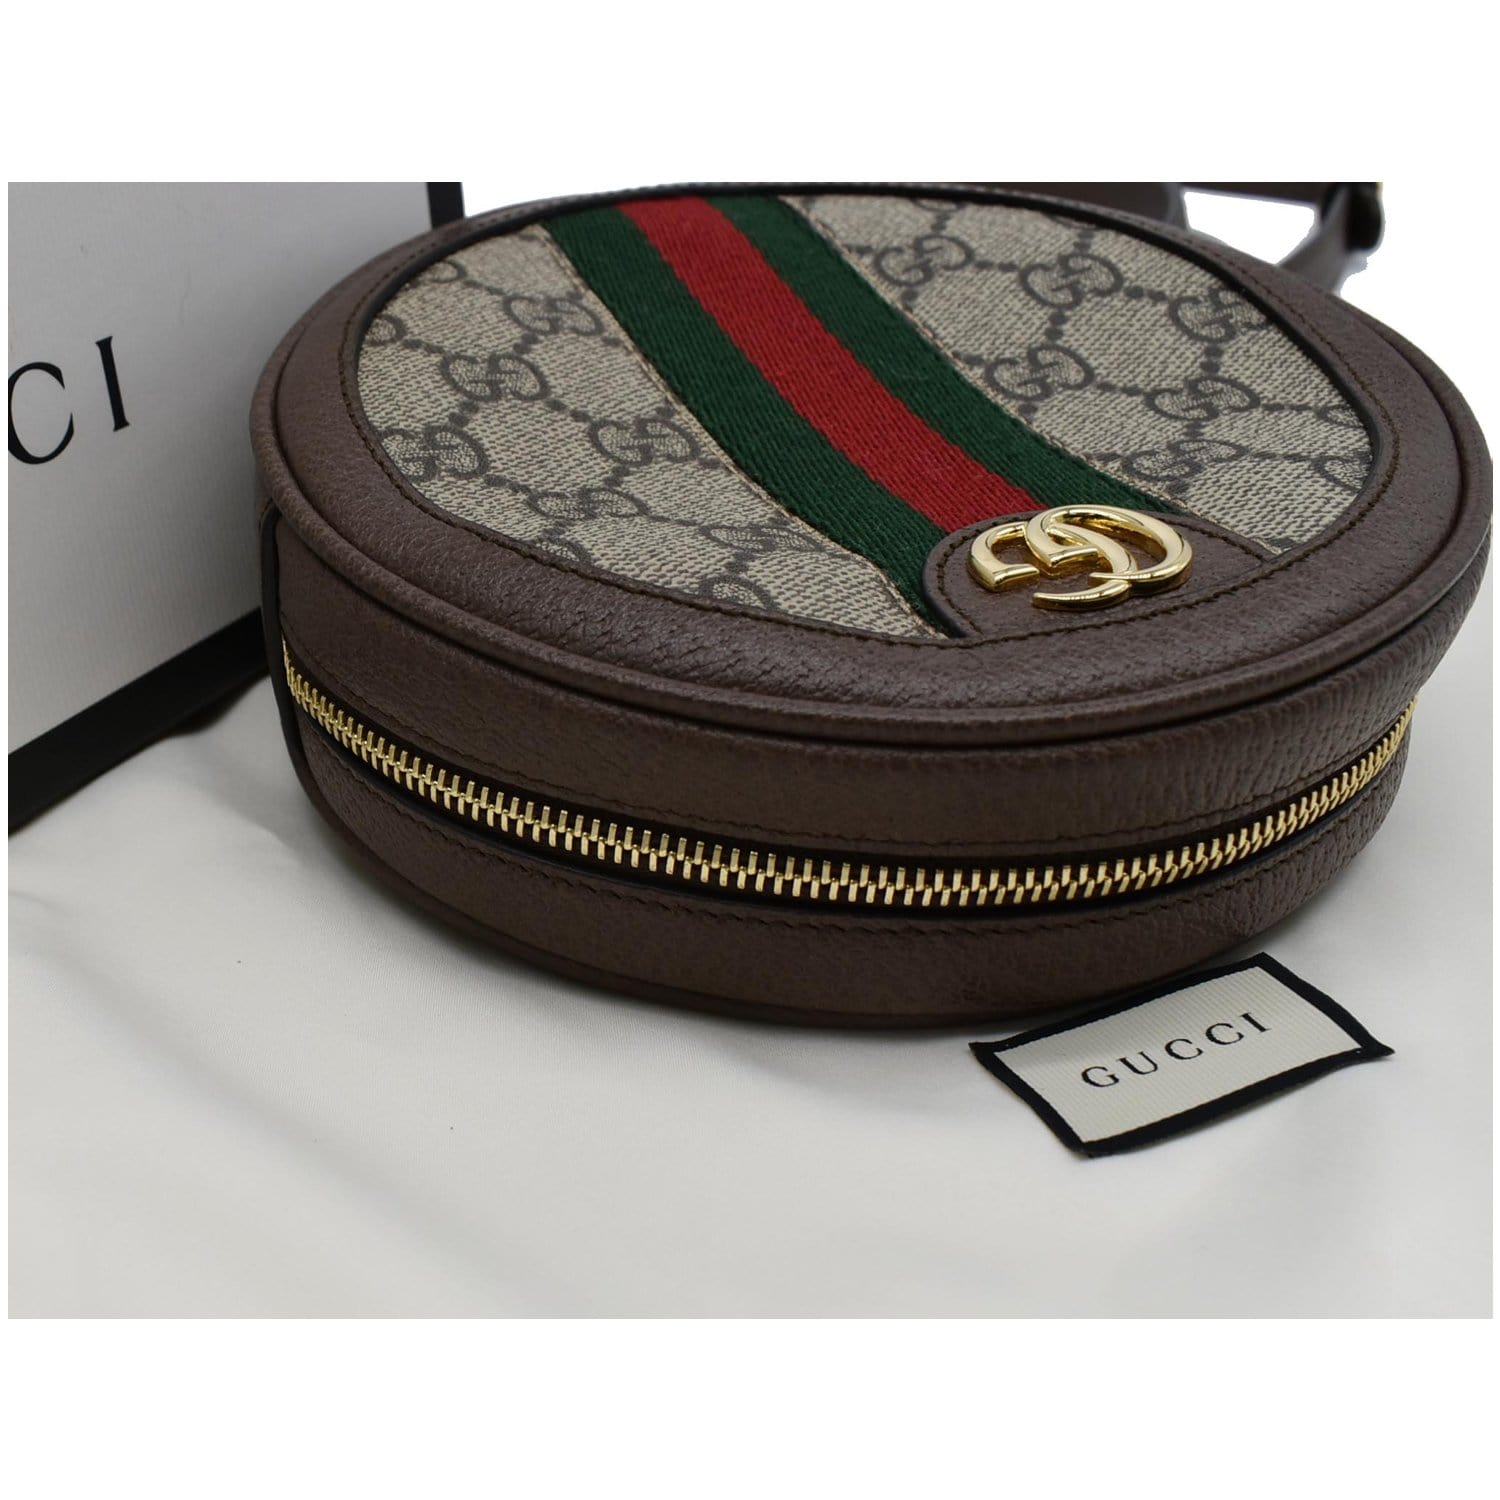 Gucci Small Ophidia GG Shoulder Bag - Farfetch